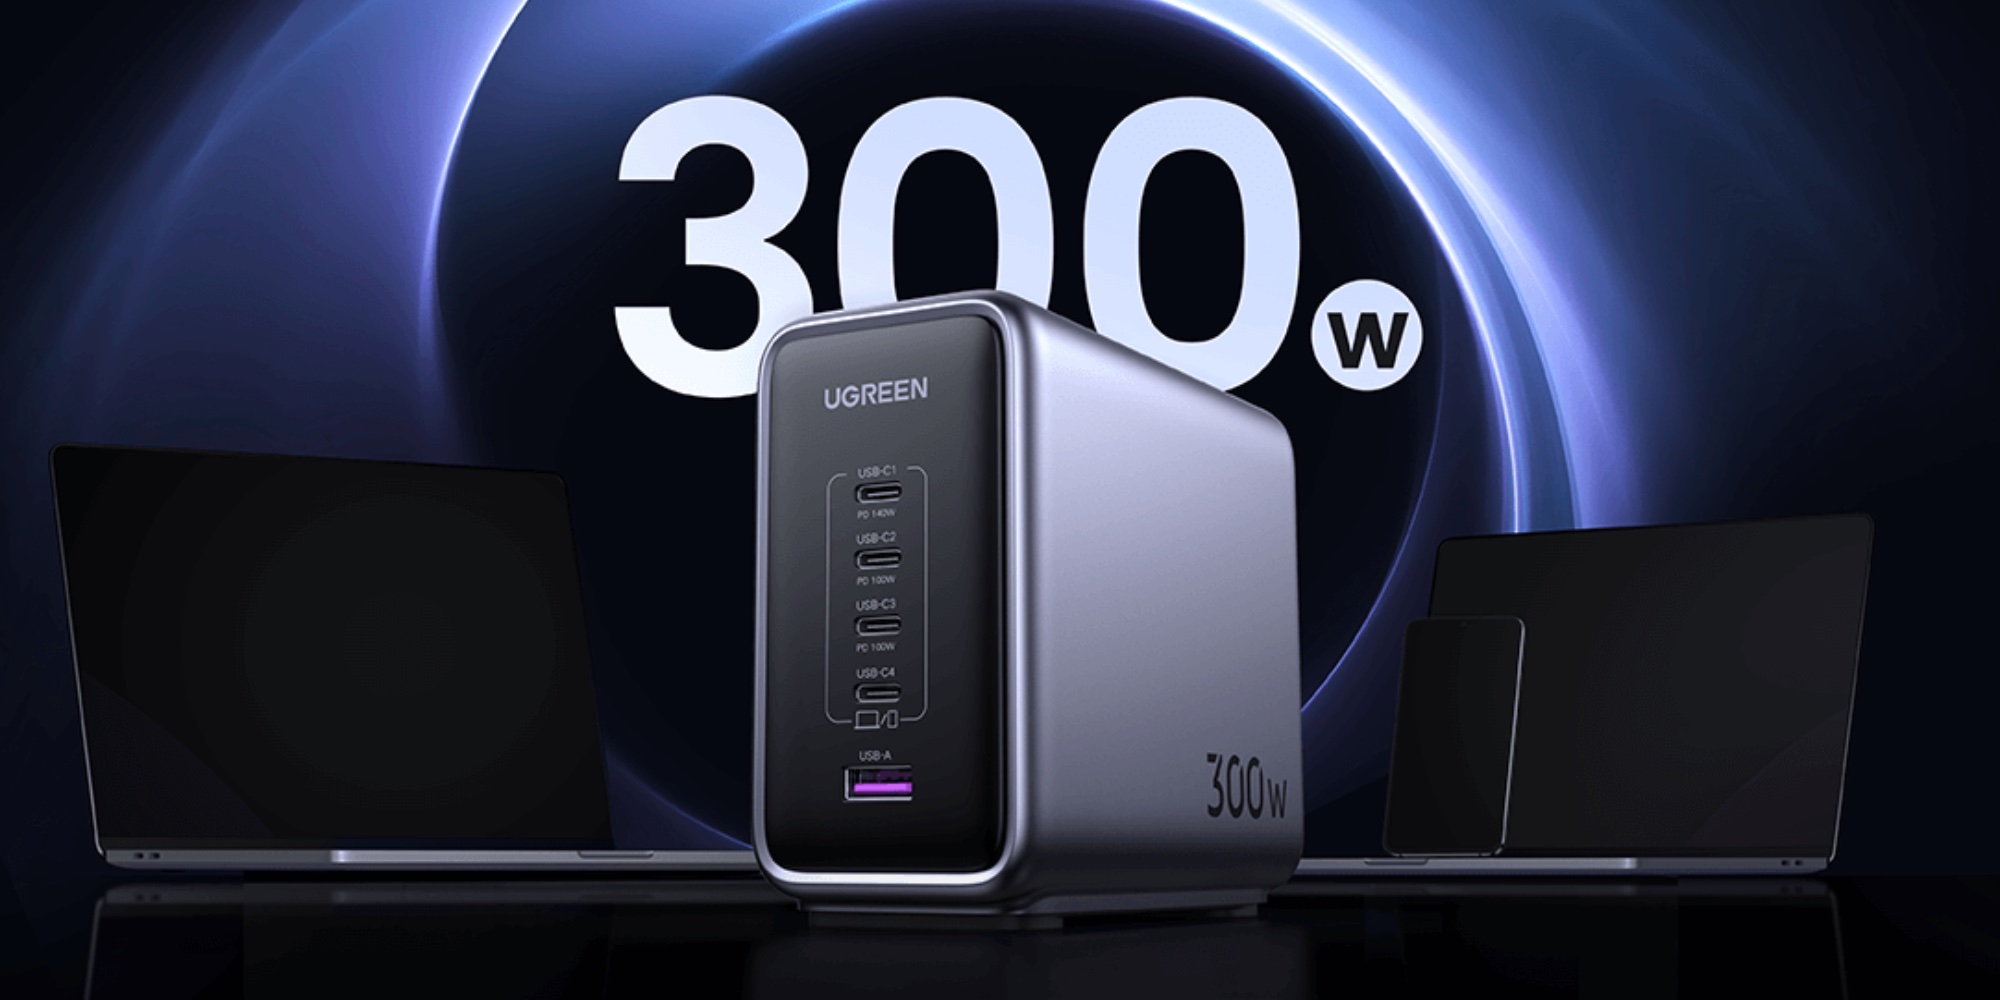 UGREEN Nexode 300W USB-C GaN Charger debuts